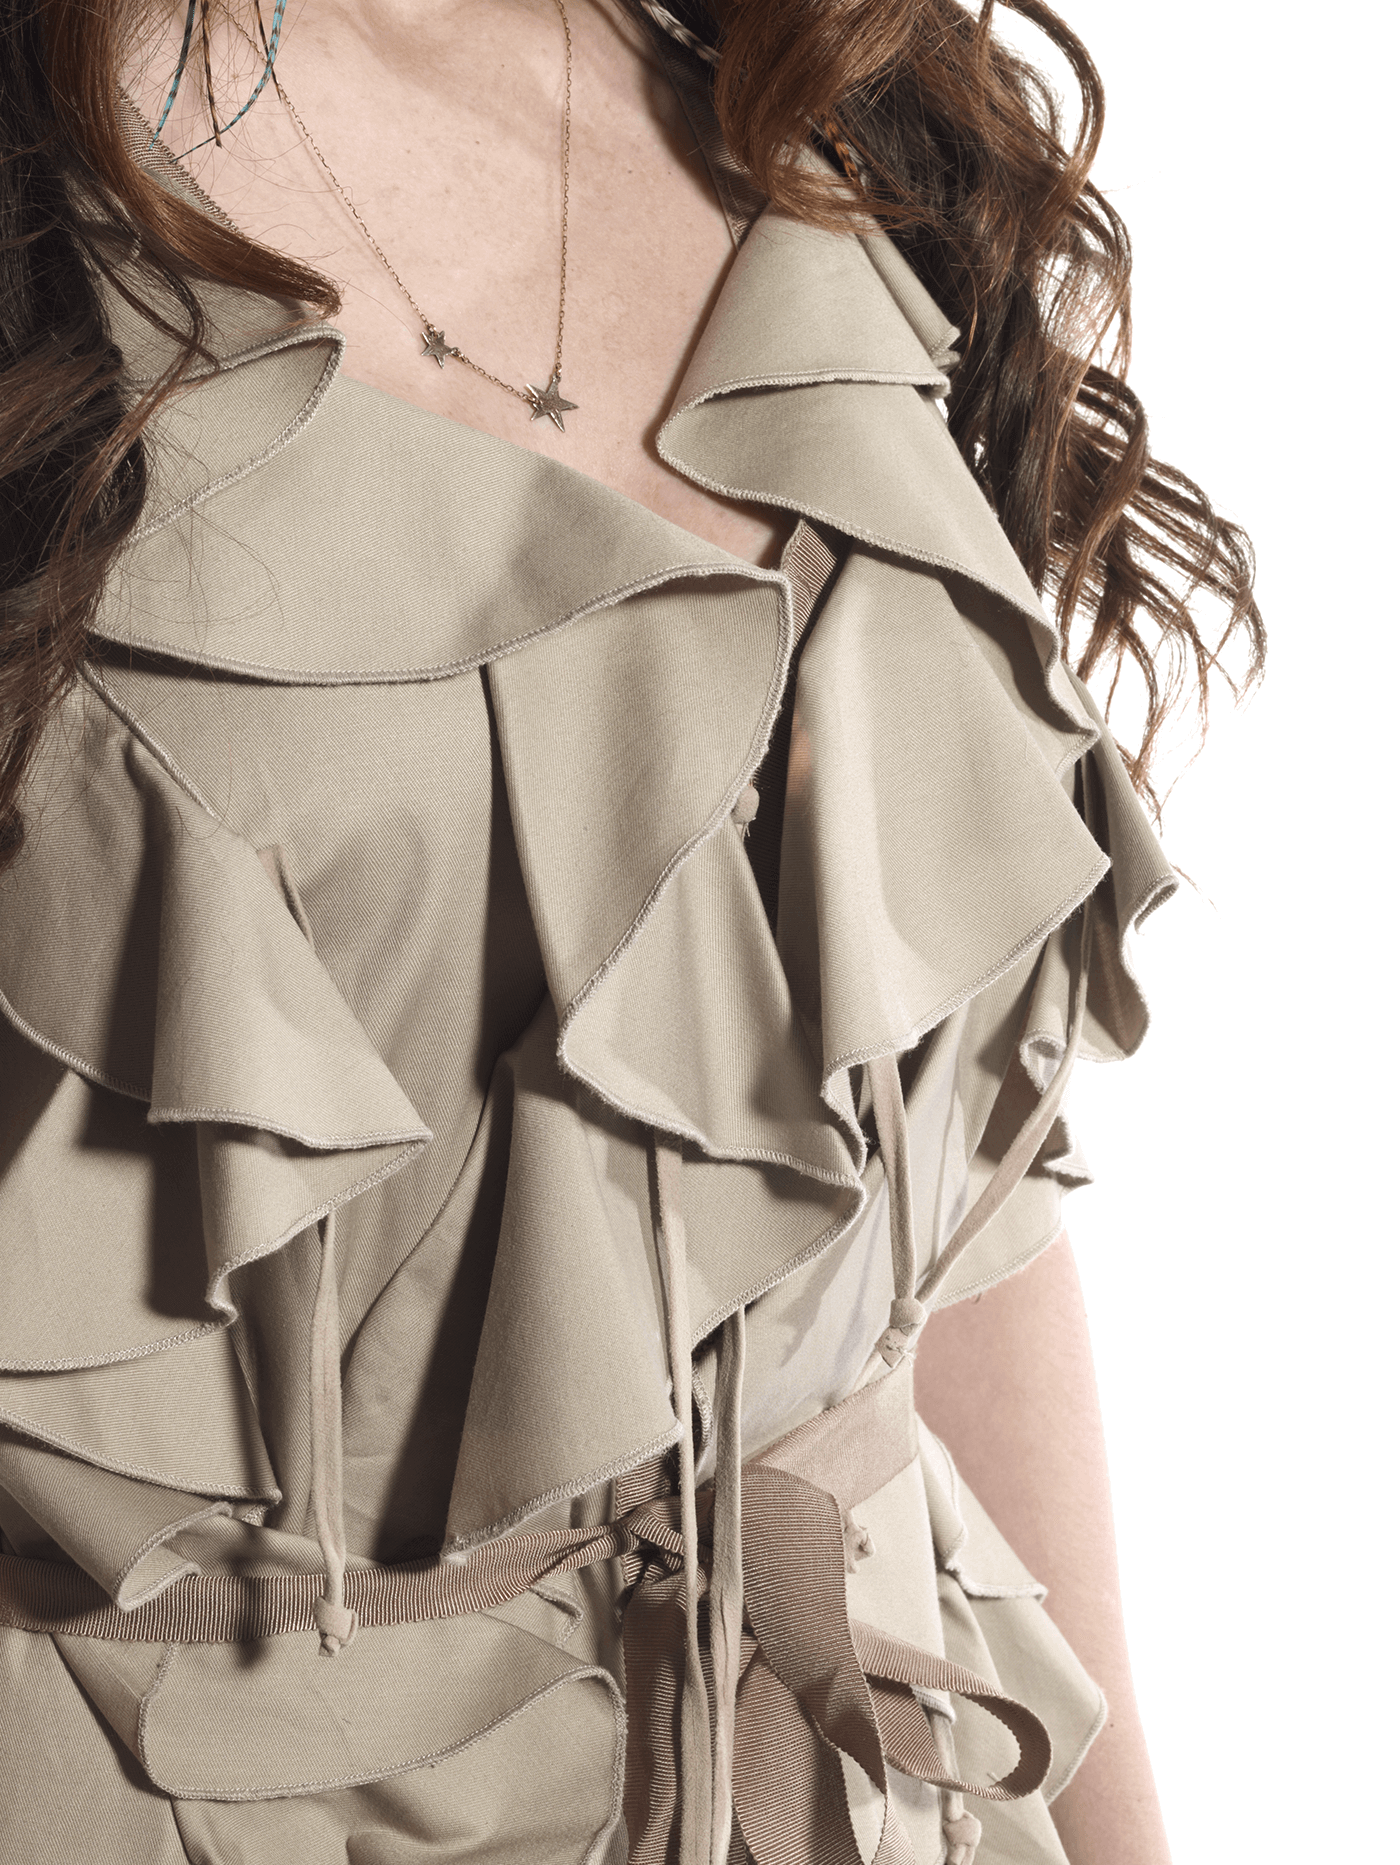 Casual Dress in Tan- Chic Belt- Front Zipper- Ruffled Detail